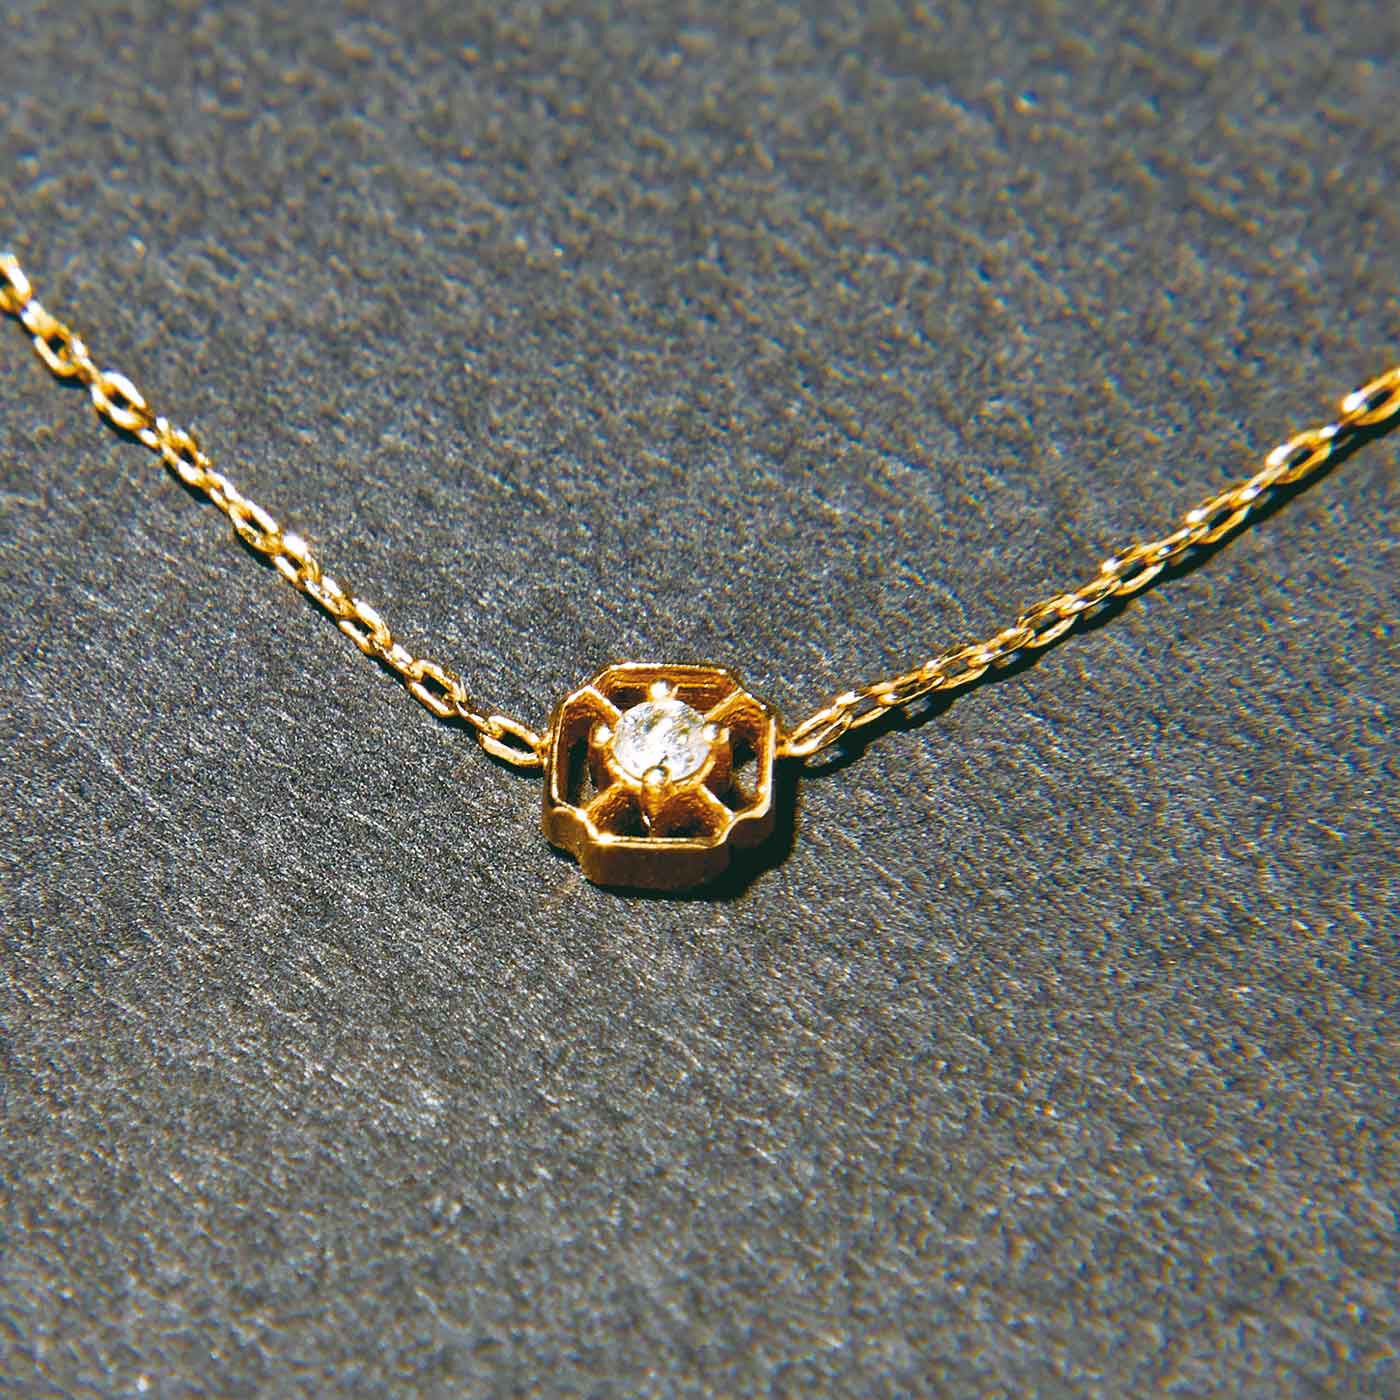 el:ment|el:ment　素の美しさを日常に ブラウンダイヤモンド2連ネックレス|ブラウンのダイヤモンドと八角形モチーフ。